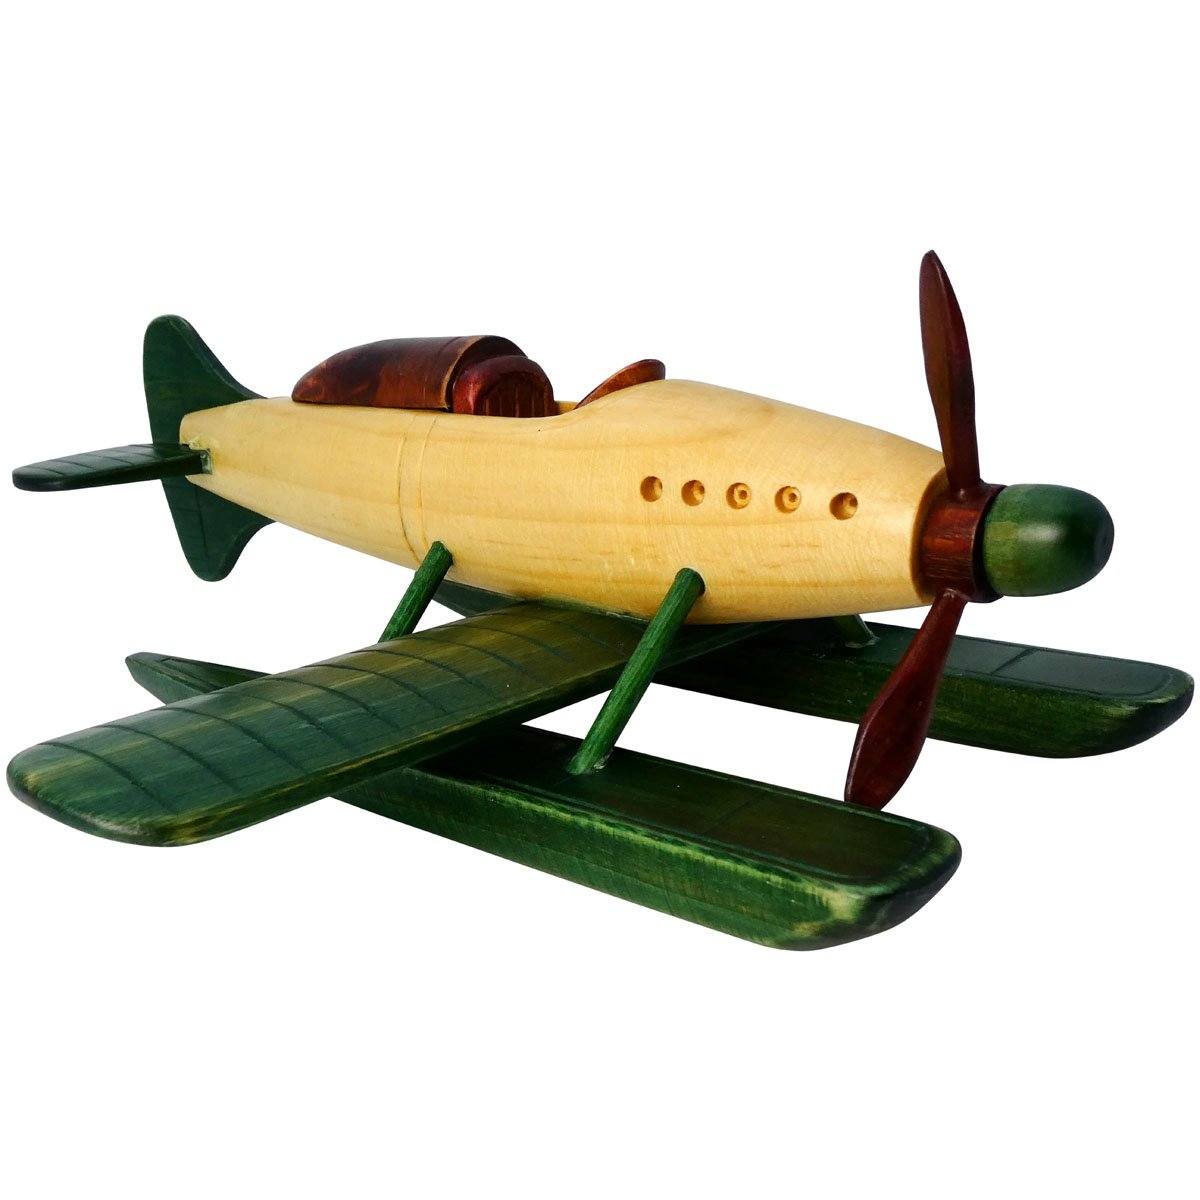 Pilot Toys Medium Wood Seaplane - PilotMall.com